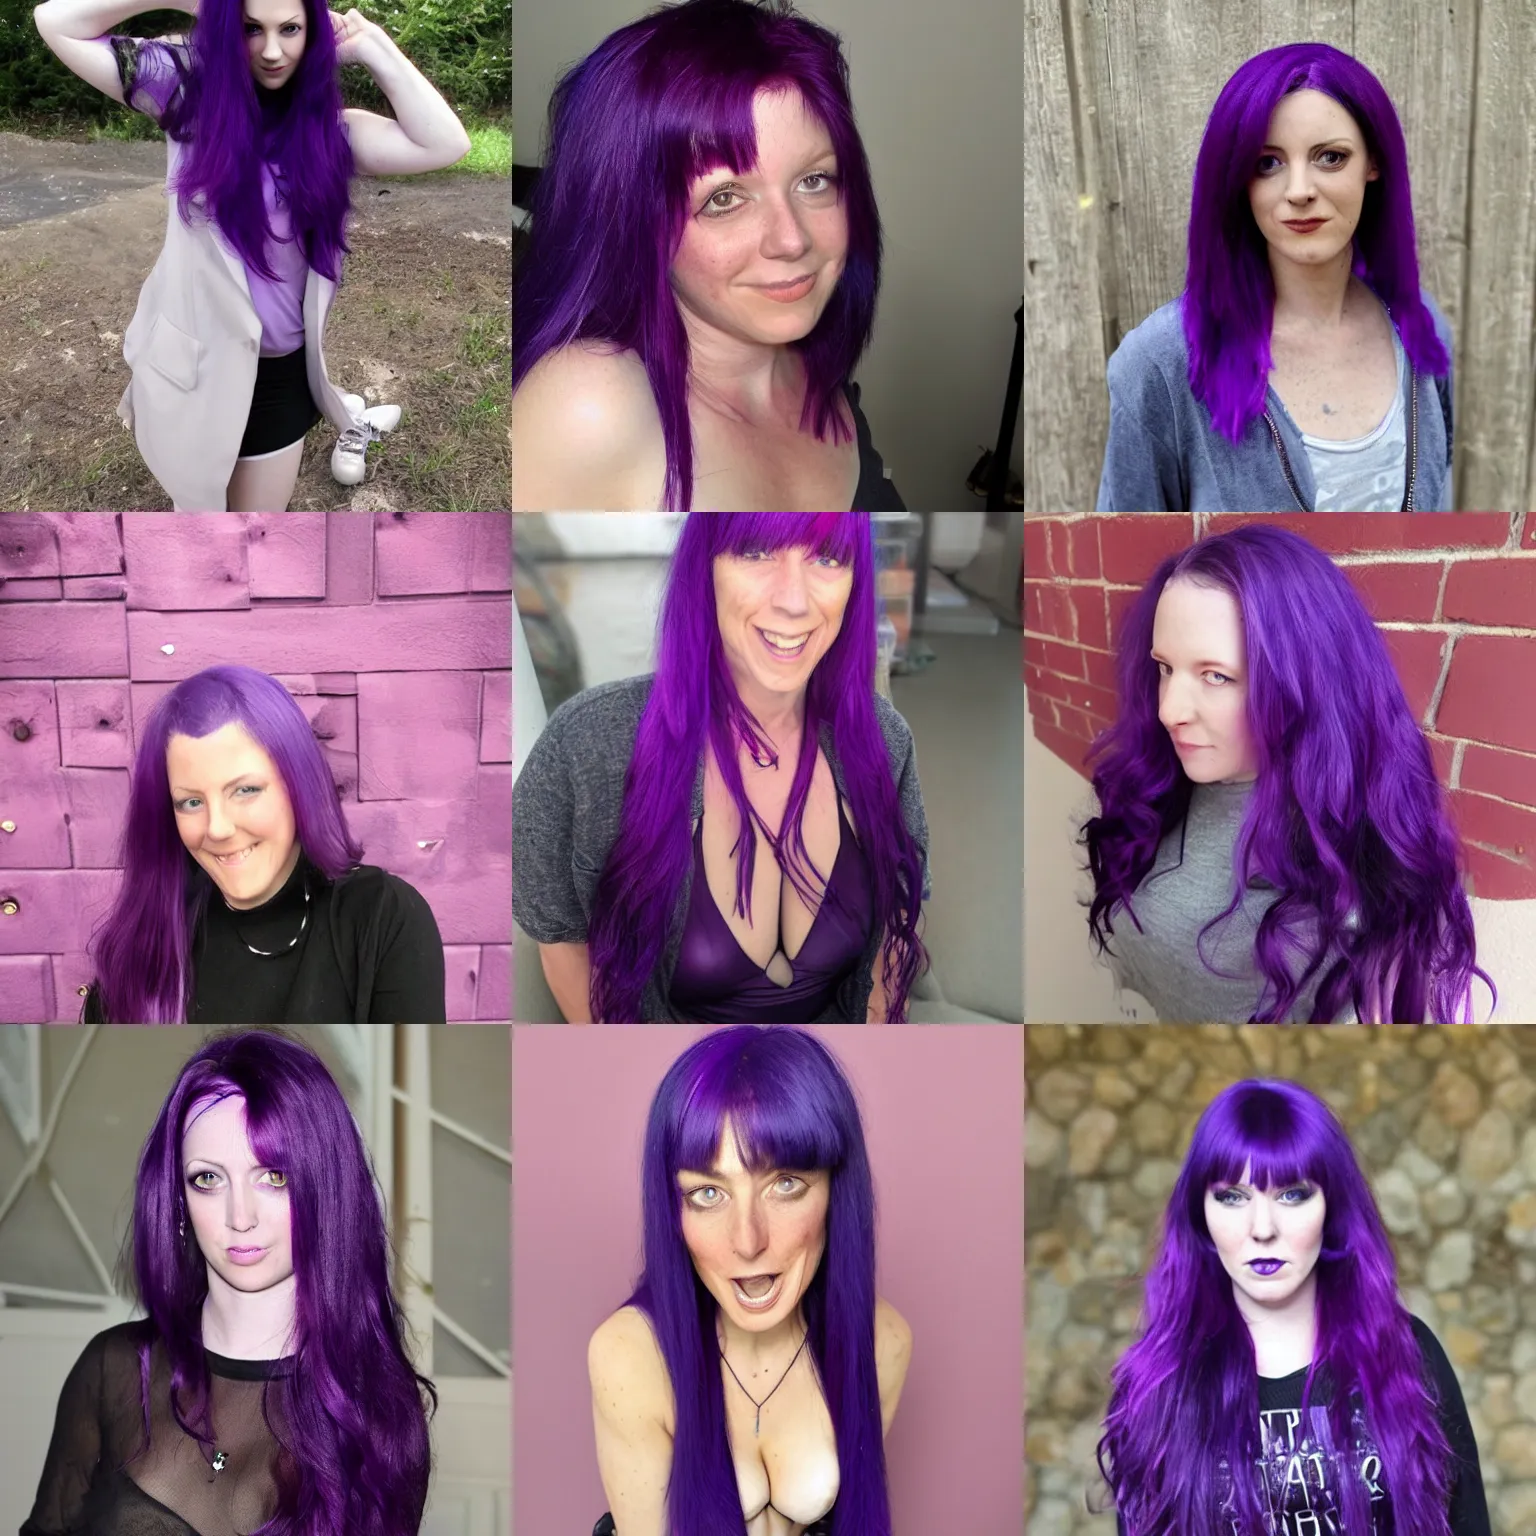 Prompt: samara morgan with purple hair